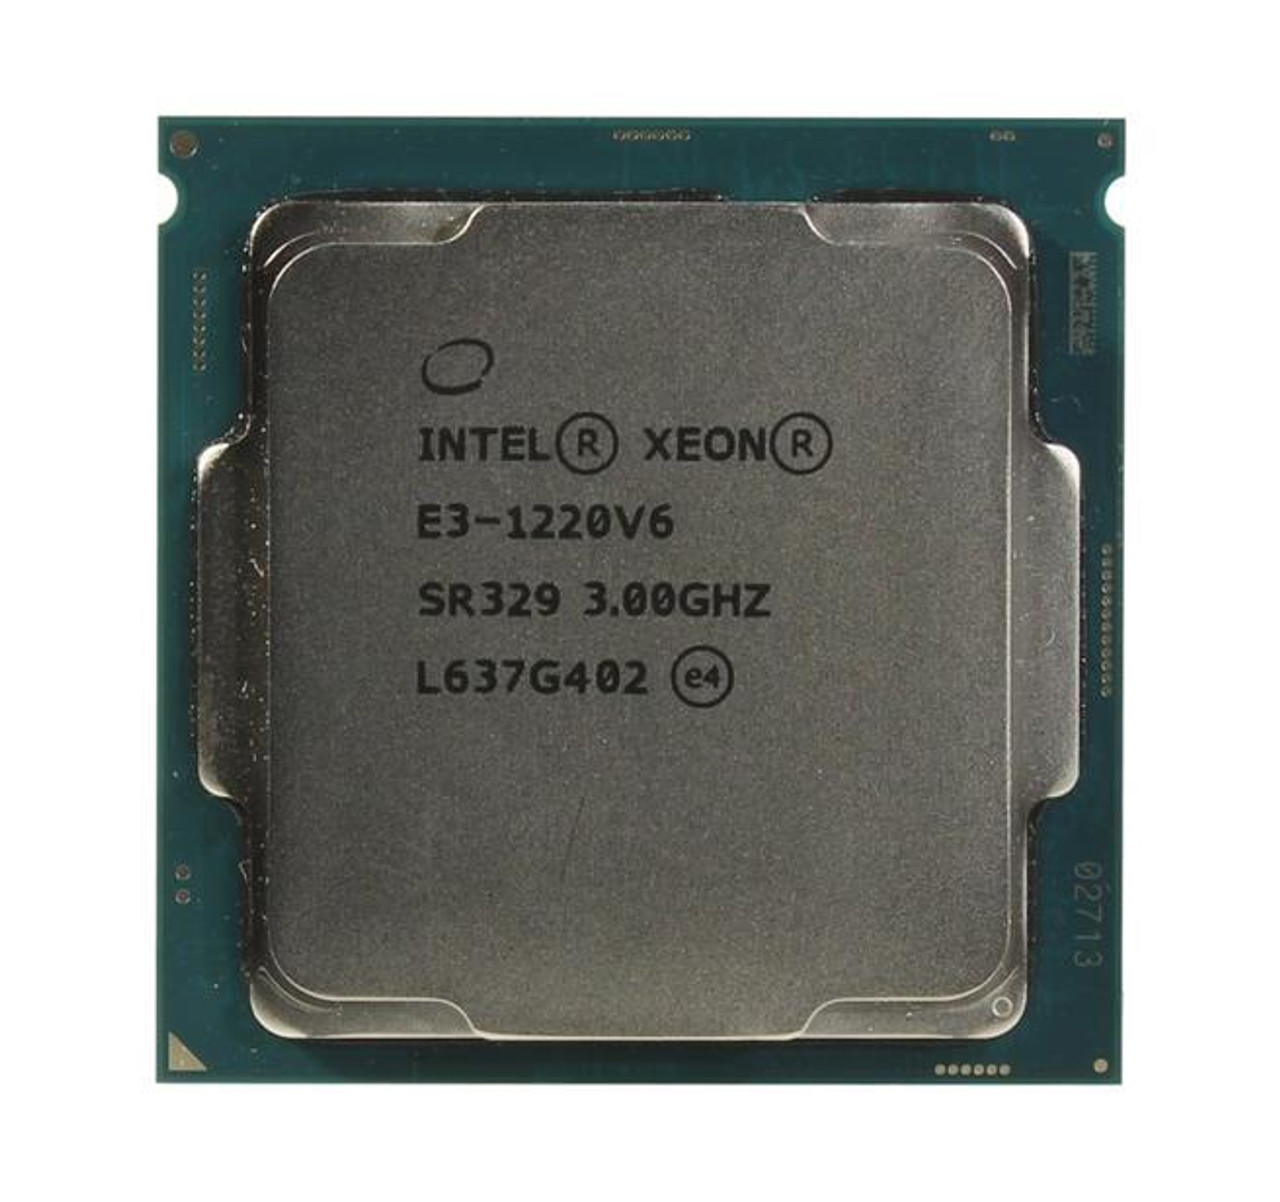 Intel XEON E3-1220V6 SR329-